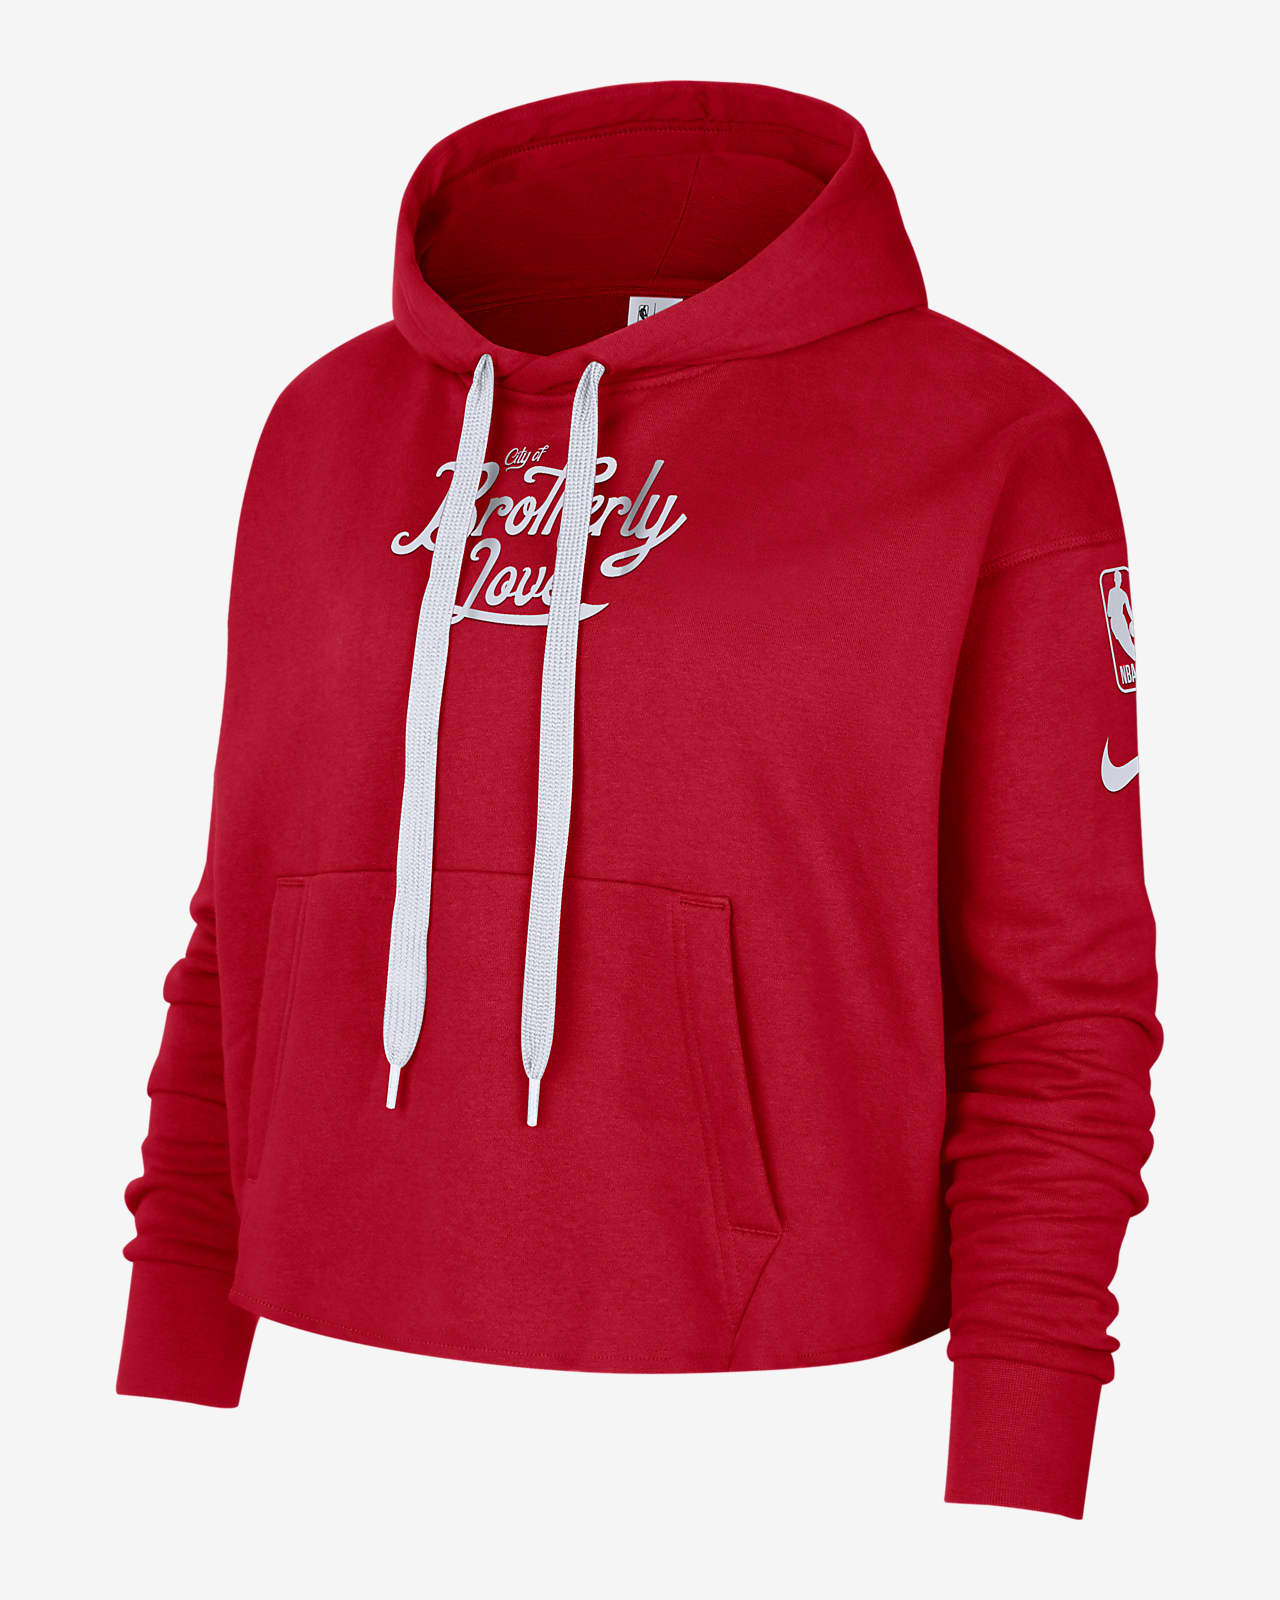 76ers women's hoodie